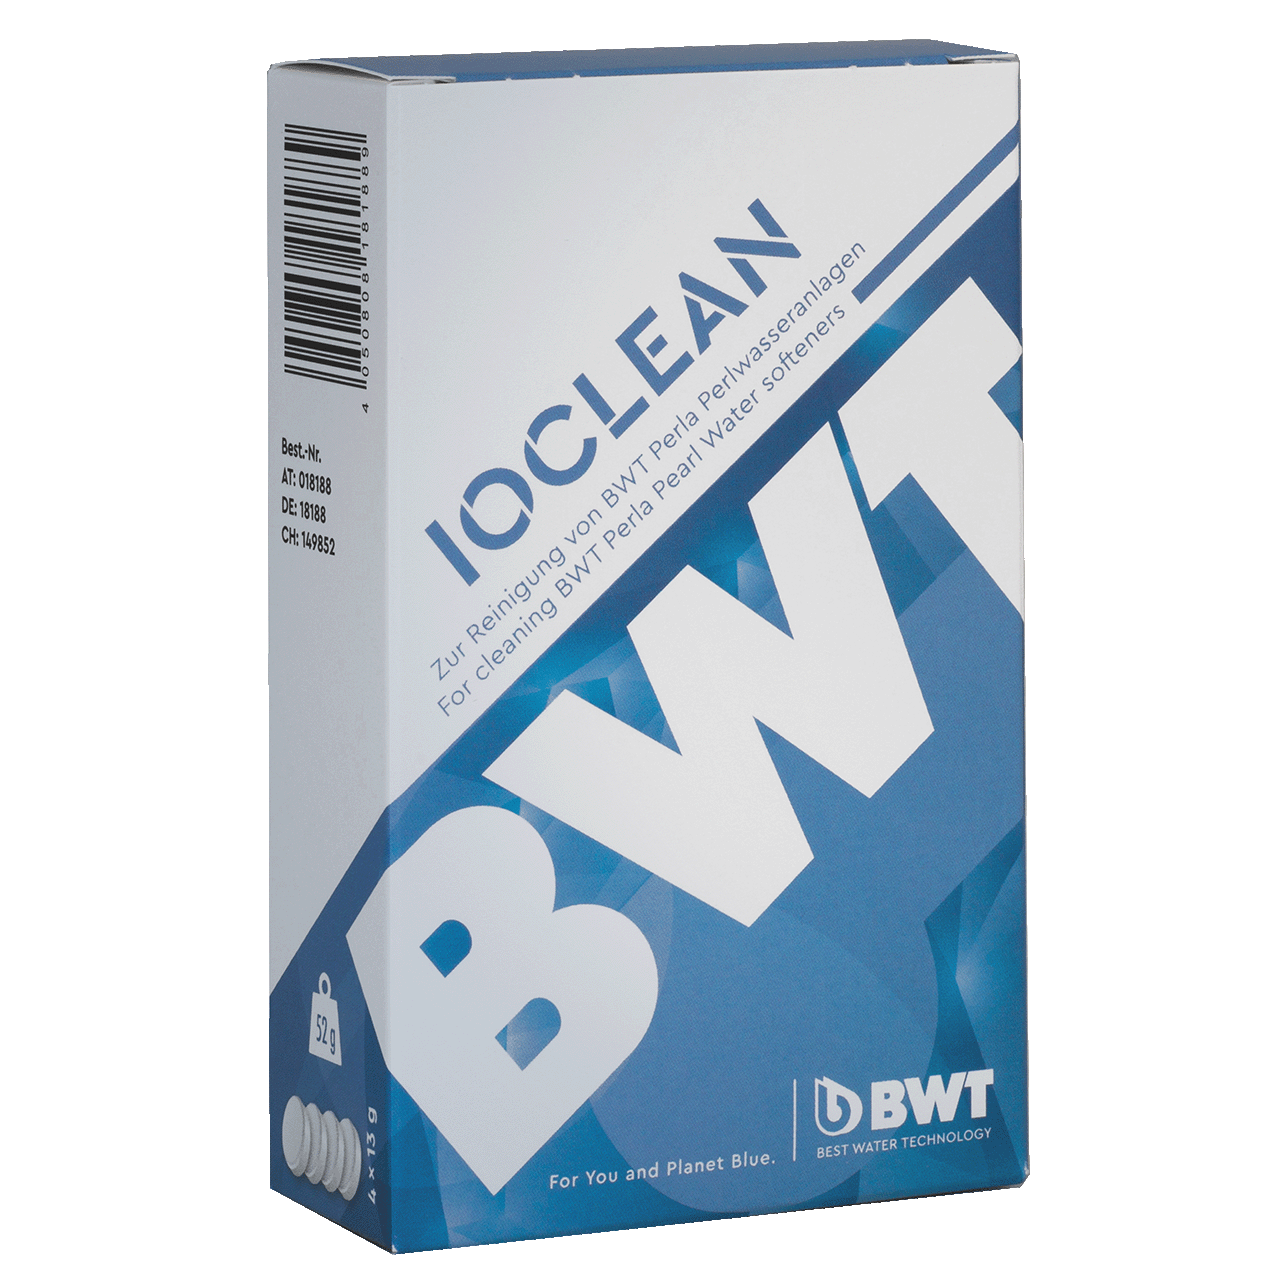 BWT Ioclean rensetabletter kalkfilter